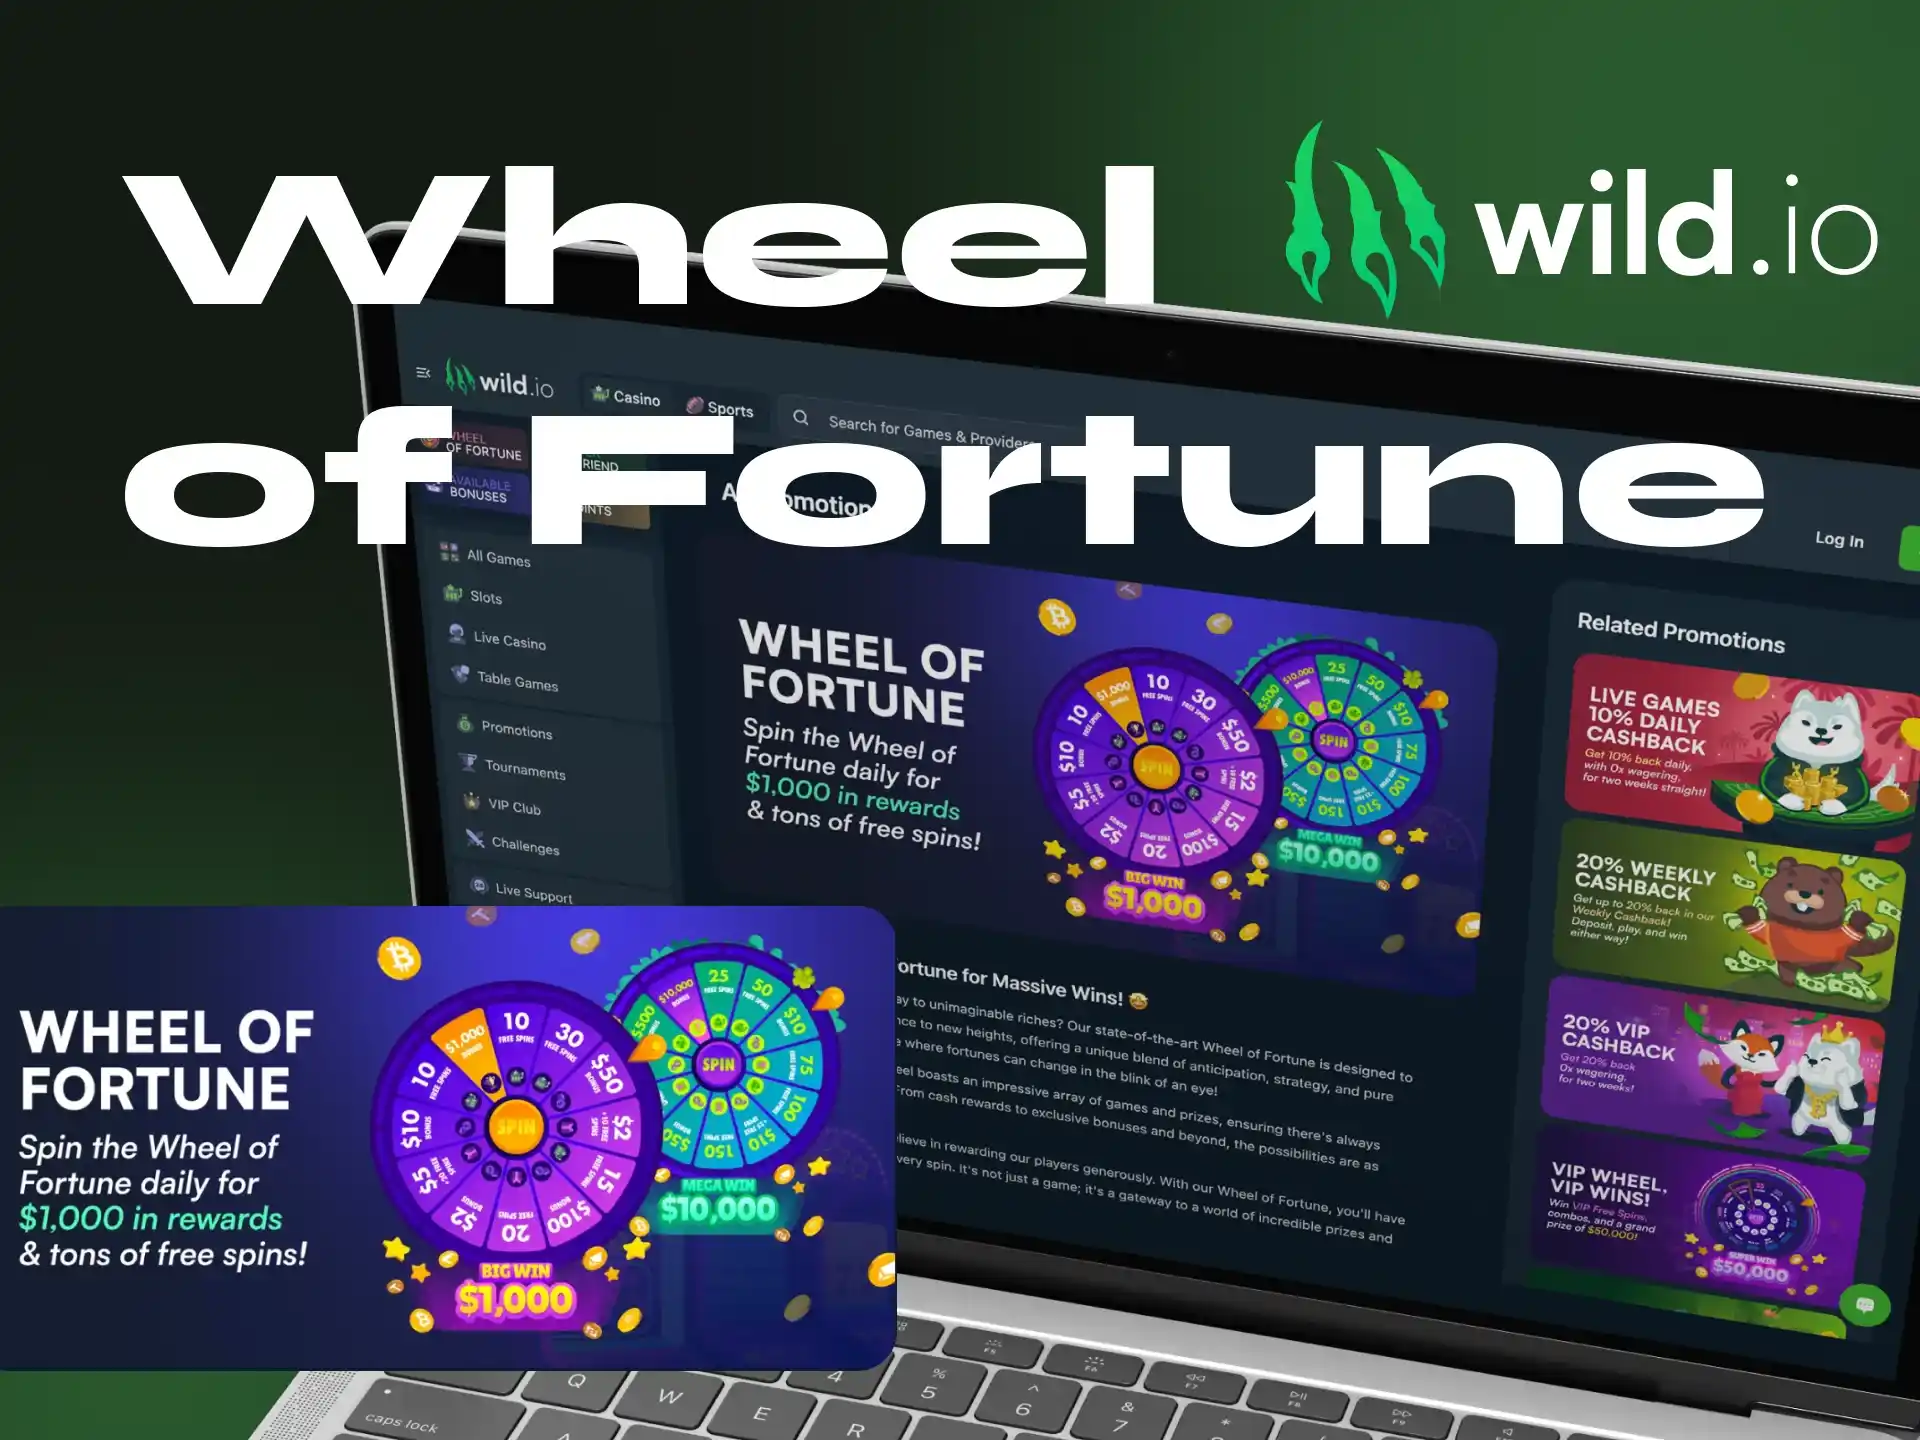 How to get Wheel of Fortune bonus at Wildio online casino.